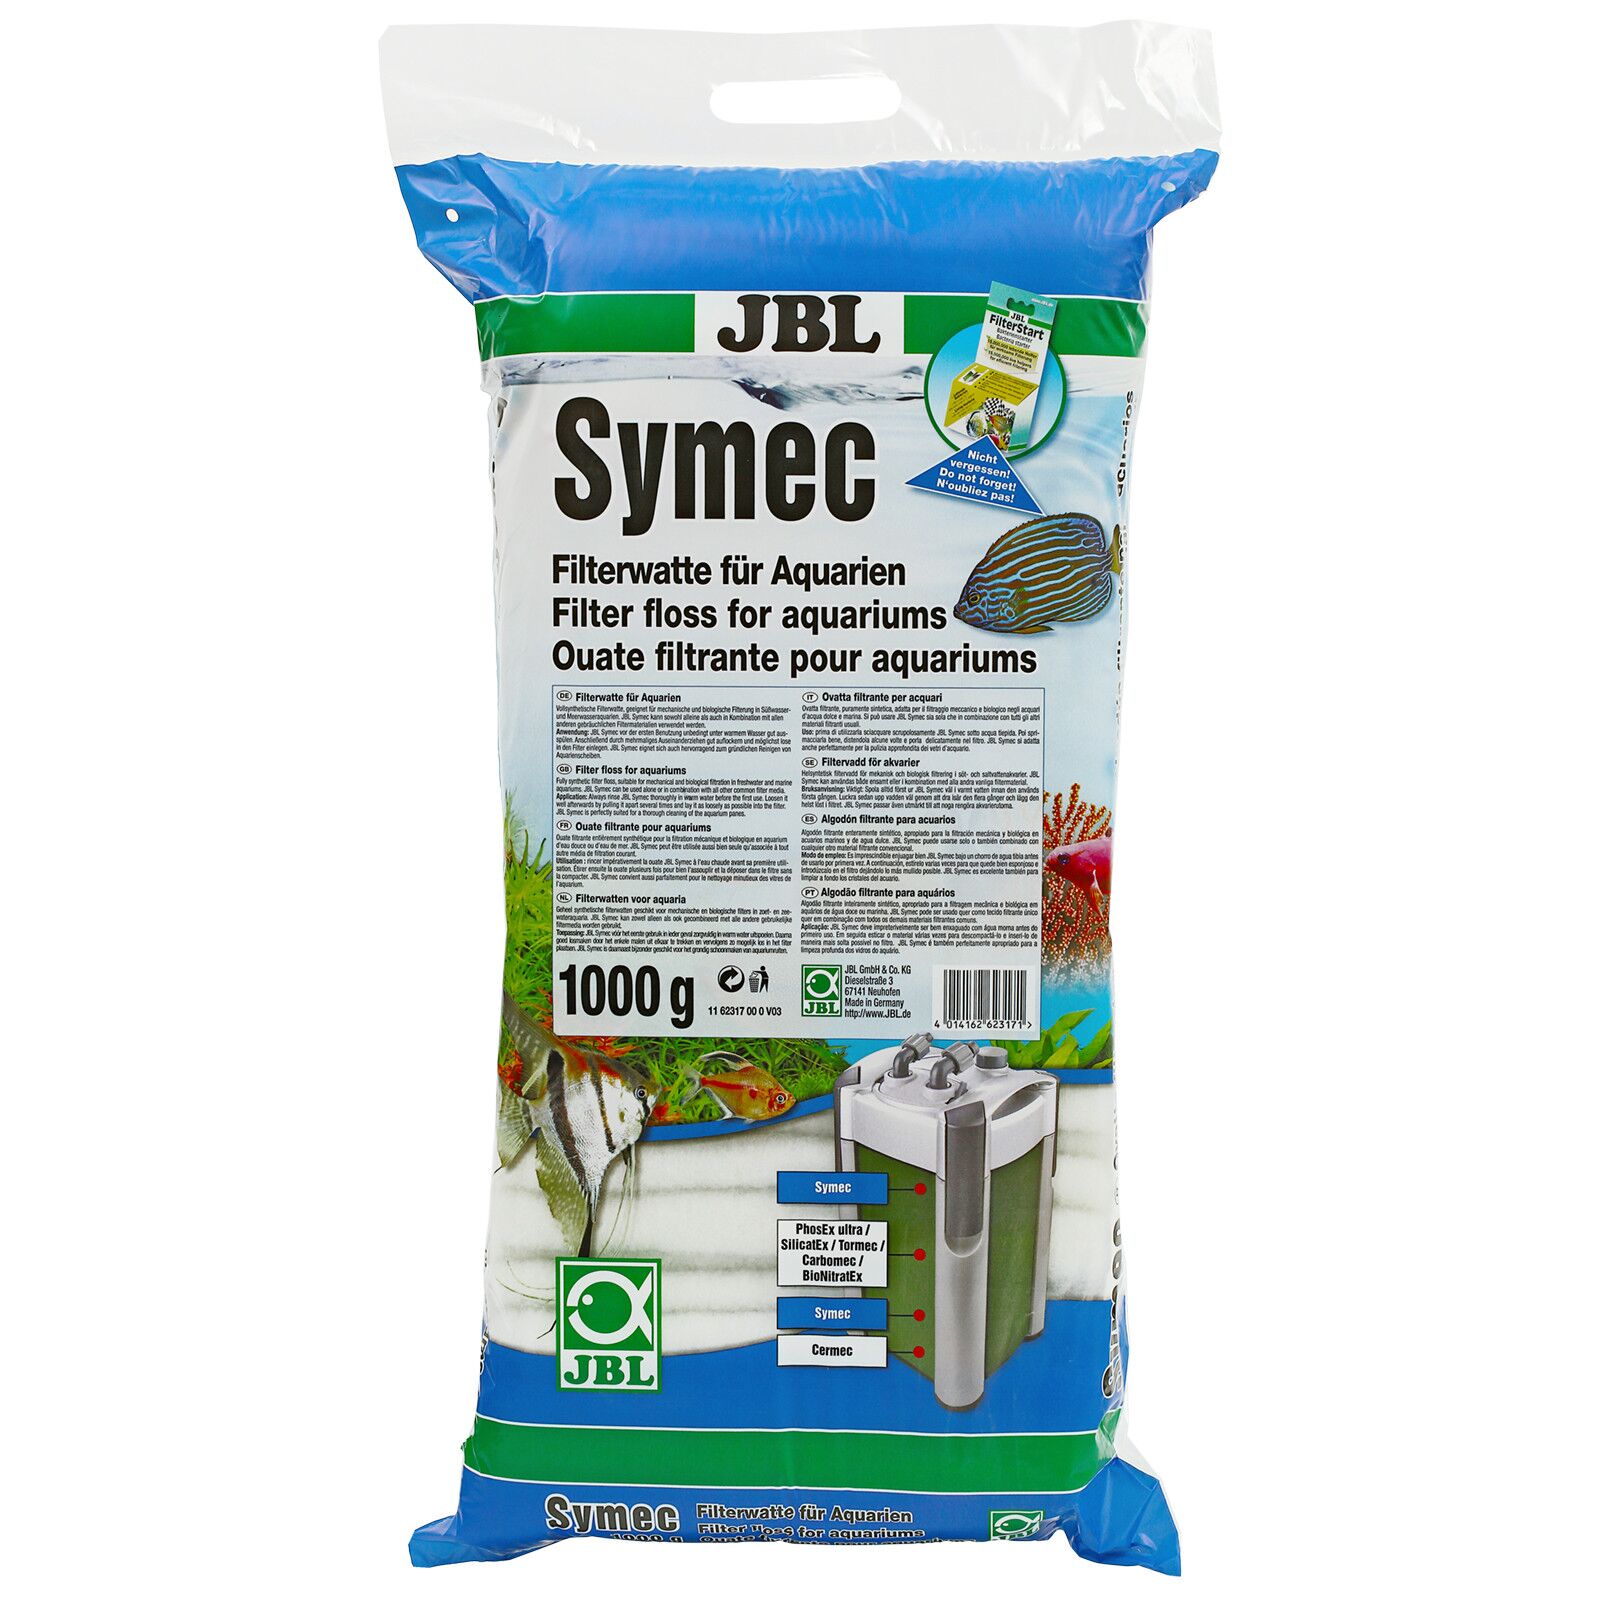 JBL - Symec Filterwatte